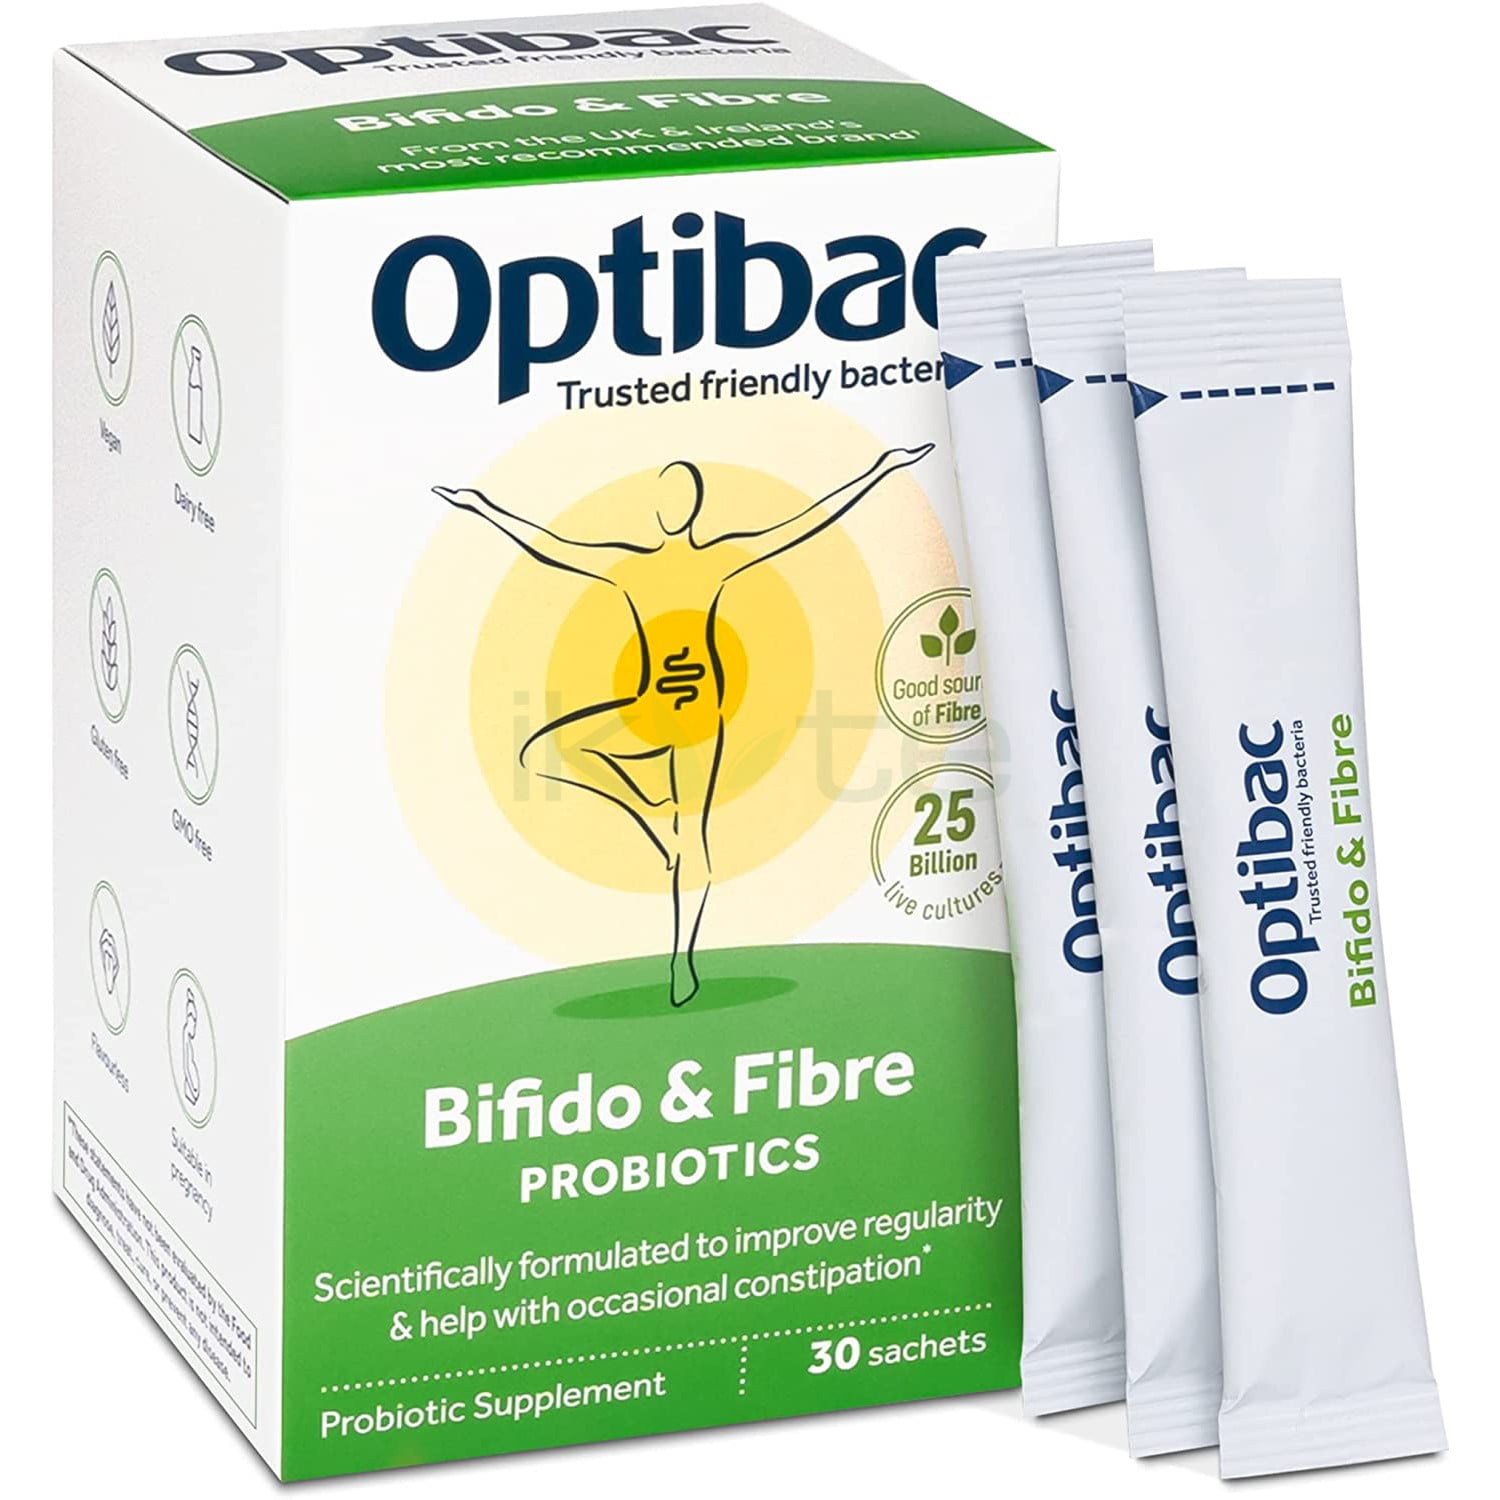 OptiBac Probiotics xanh 4 ikute.vn